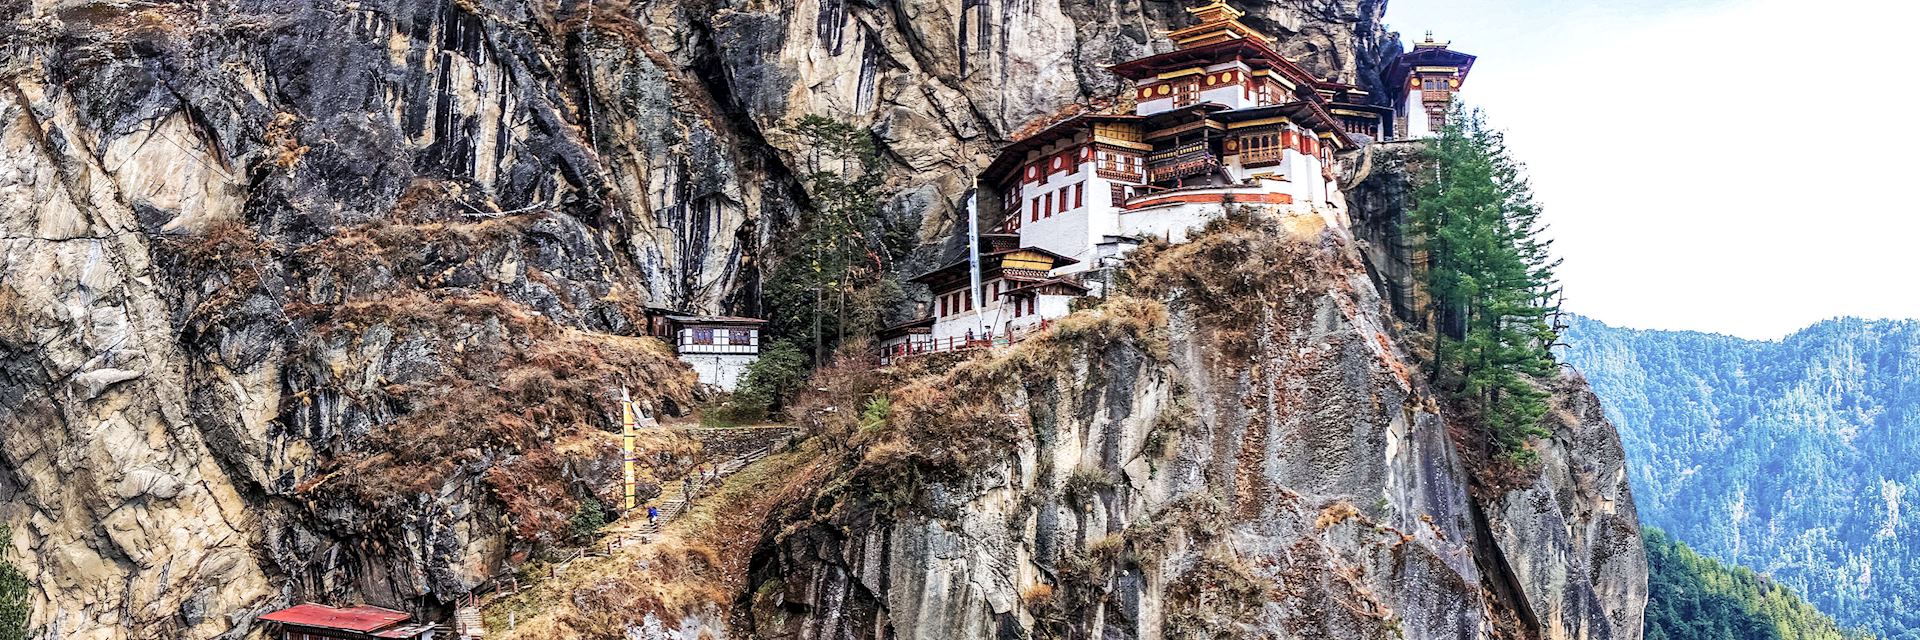 Taktshang, the Tiger’s Nest Monastery